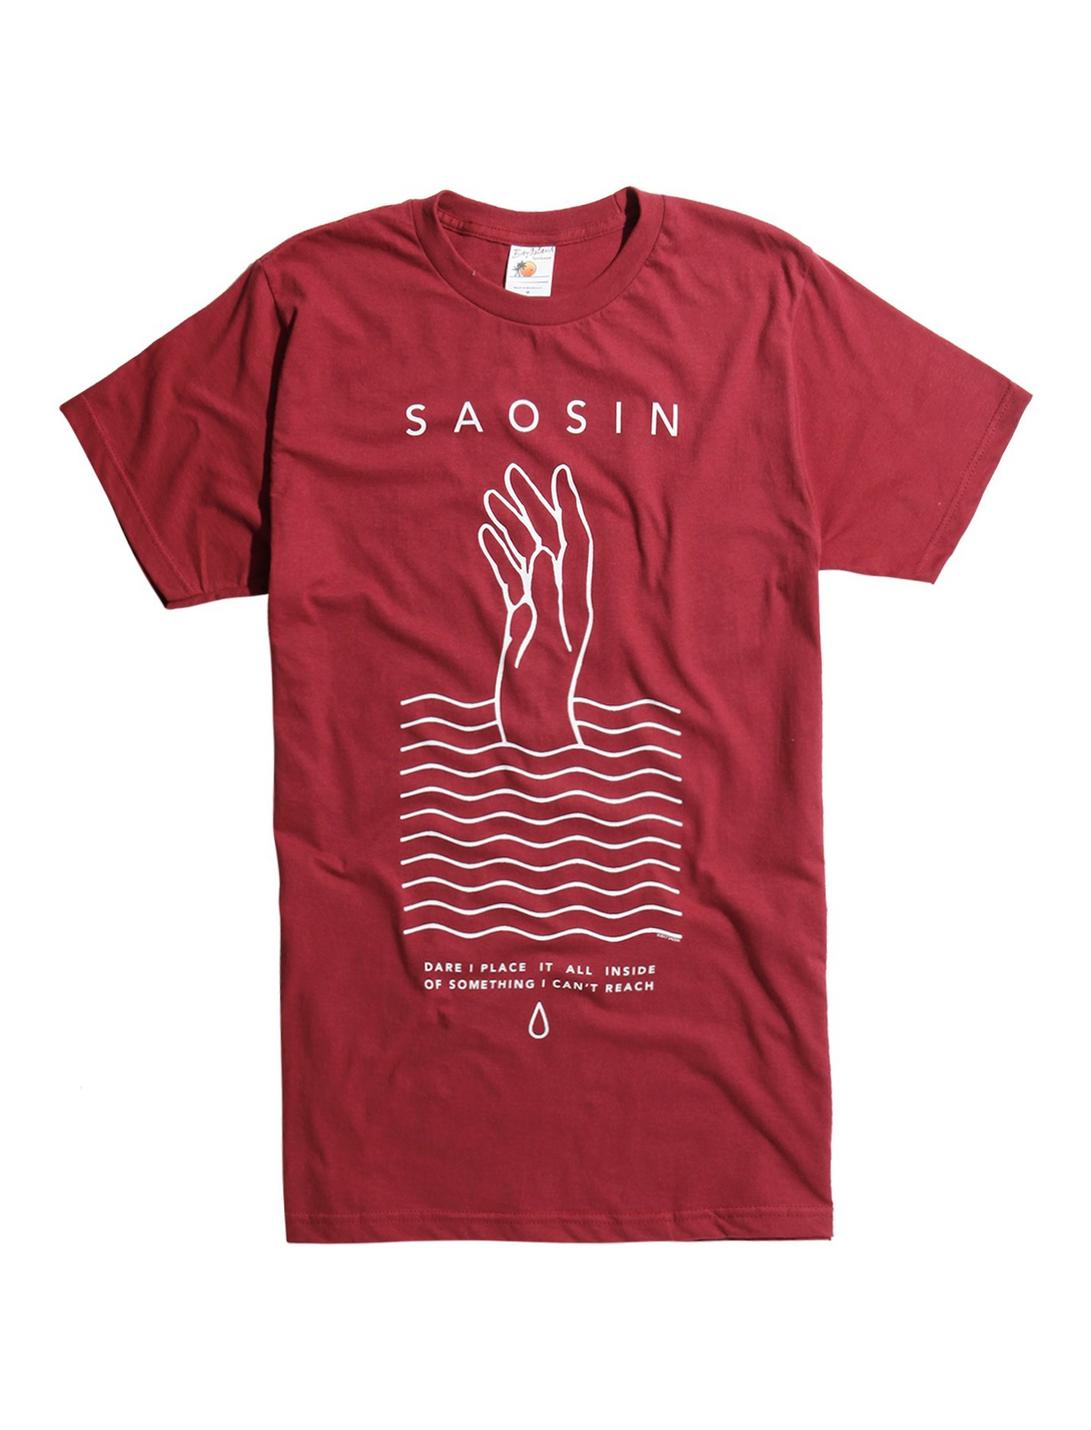 Saosin Illusion & Control Lyric T-Shirt, BURGUNDY, hi-res